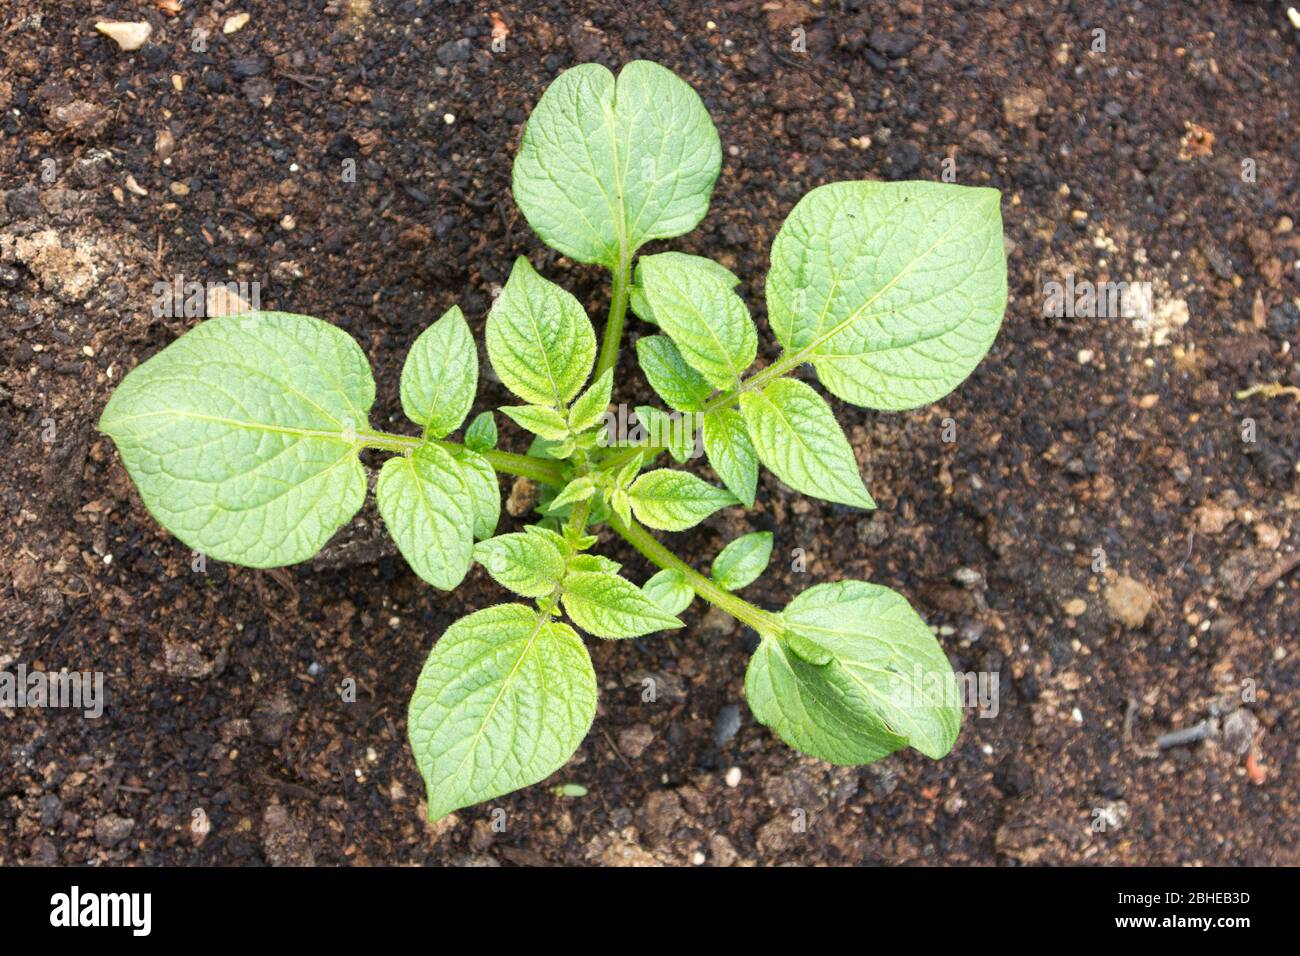 A 5 week old potato plant Stock Photo